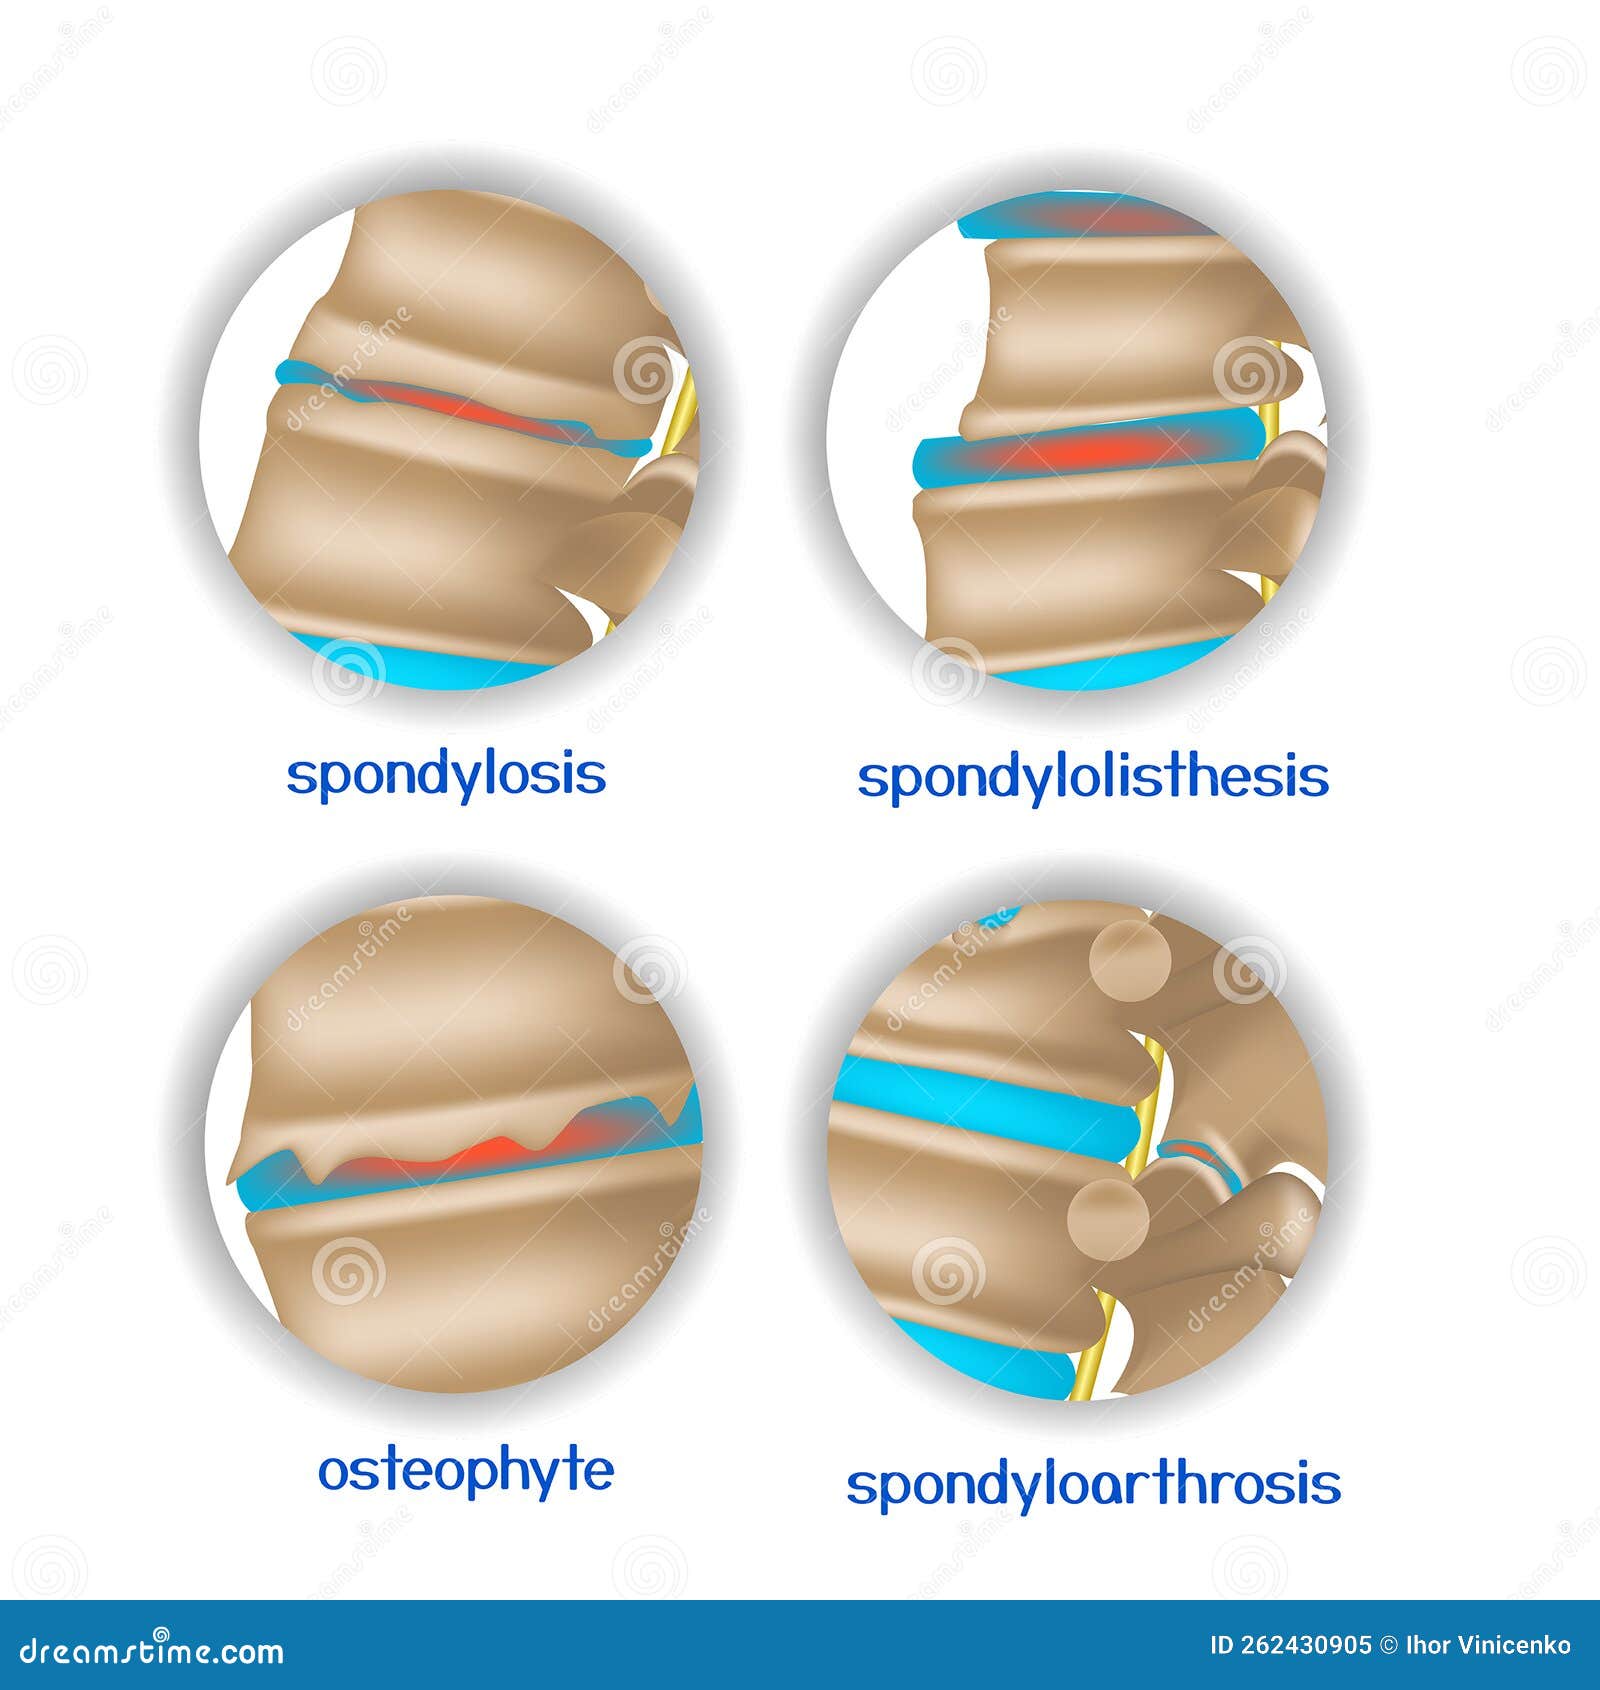 spine diseases. various pathologies of intervertebral discs and bones.